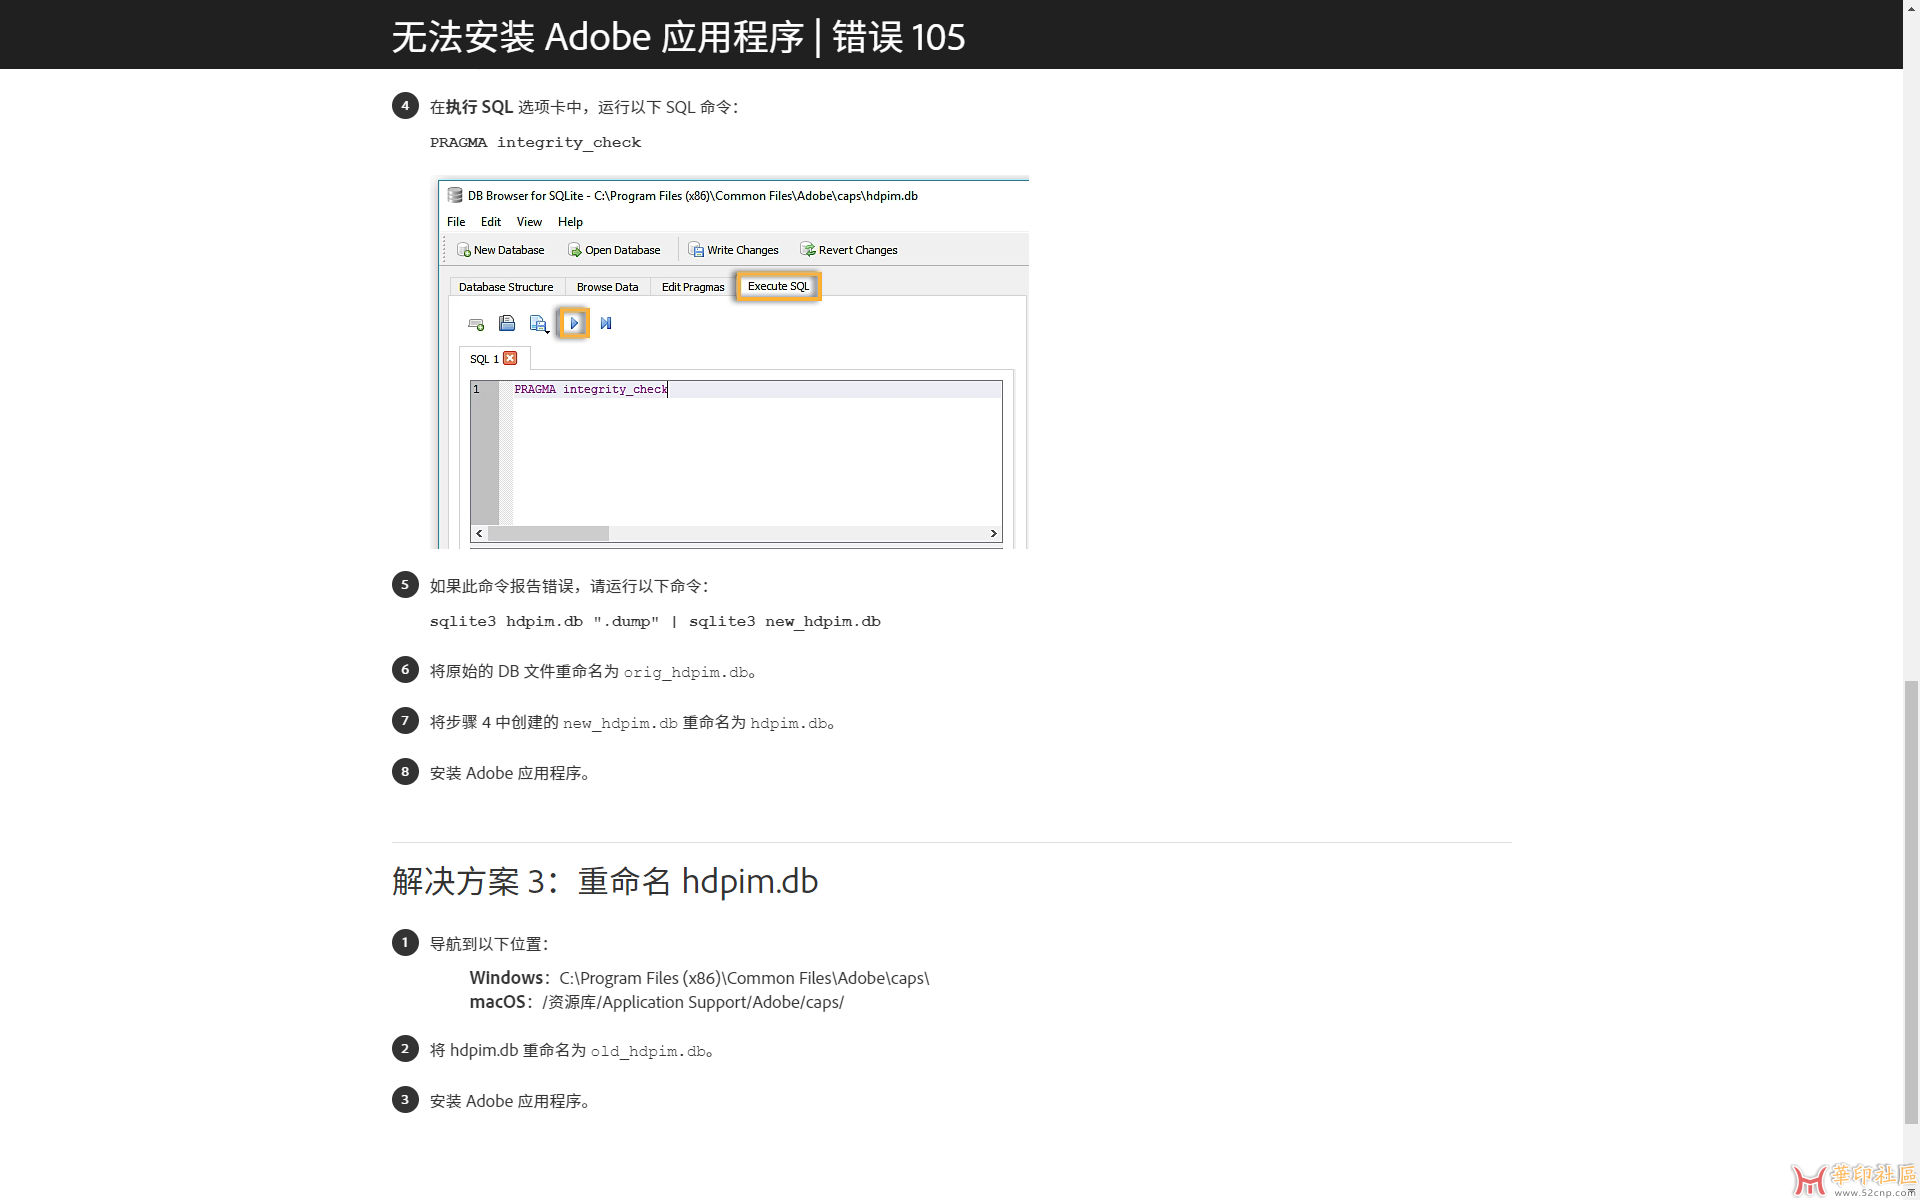 Adobe产品系列：弹窗“1”“44”“105”的修复教程{tag}(10)